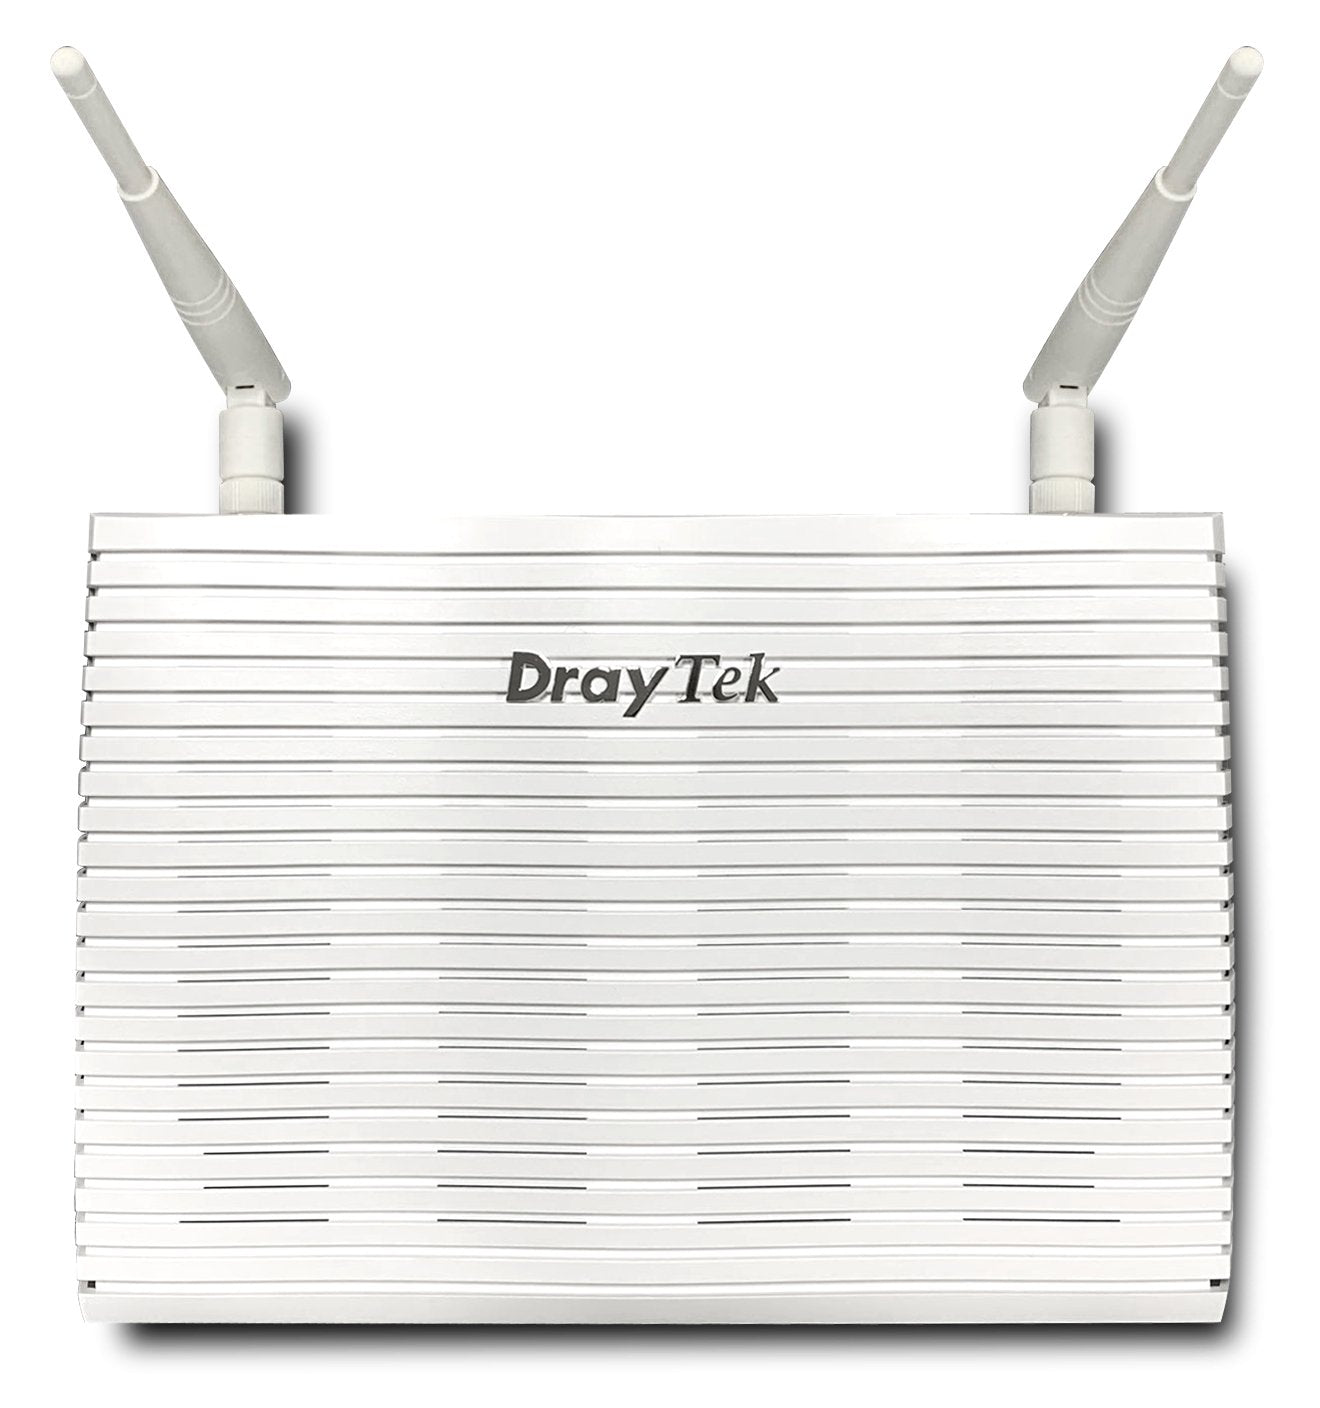 DrayTek 2865ax Dual-WAN ADSL+/VDSL2 WiFi 6 Broadband Router Top Down View